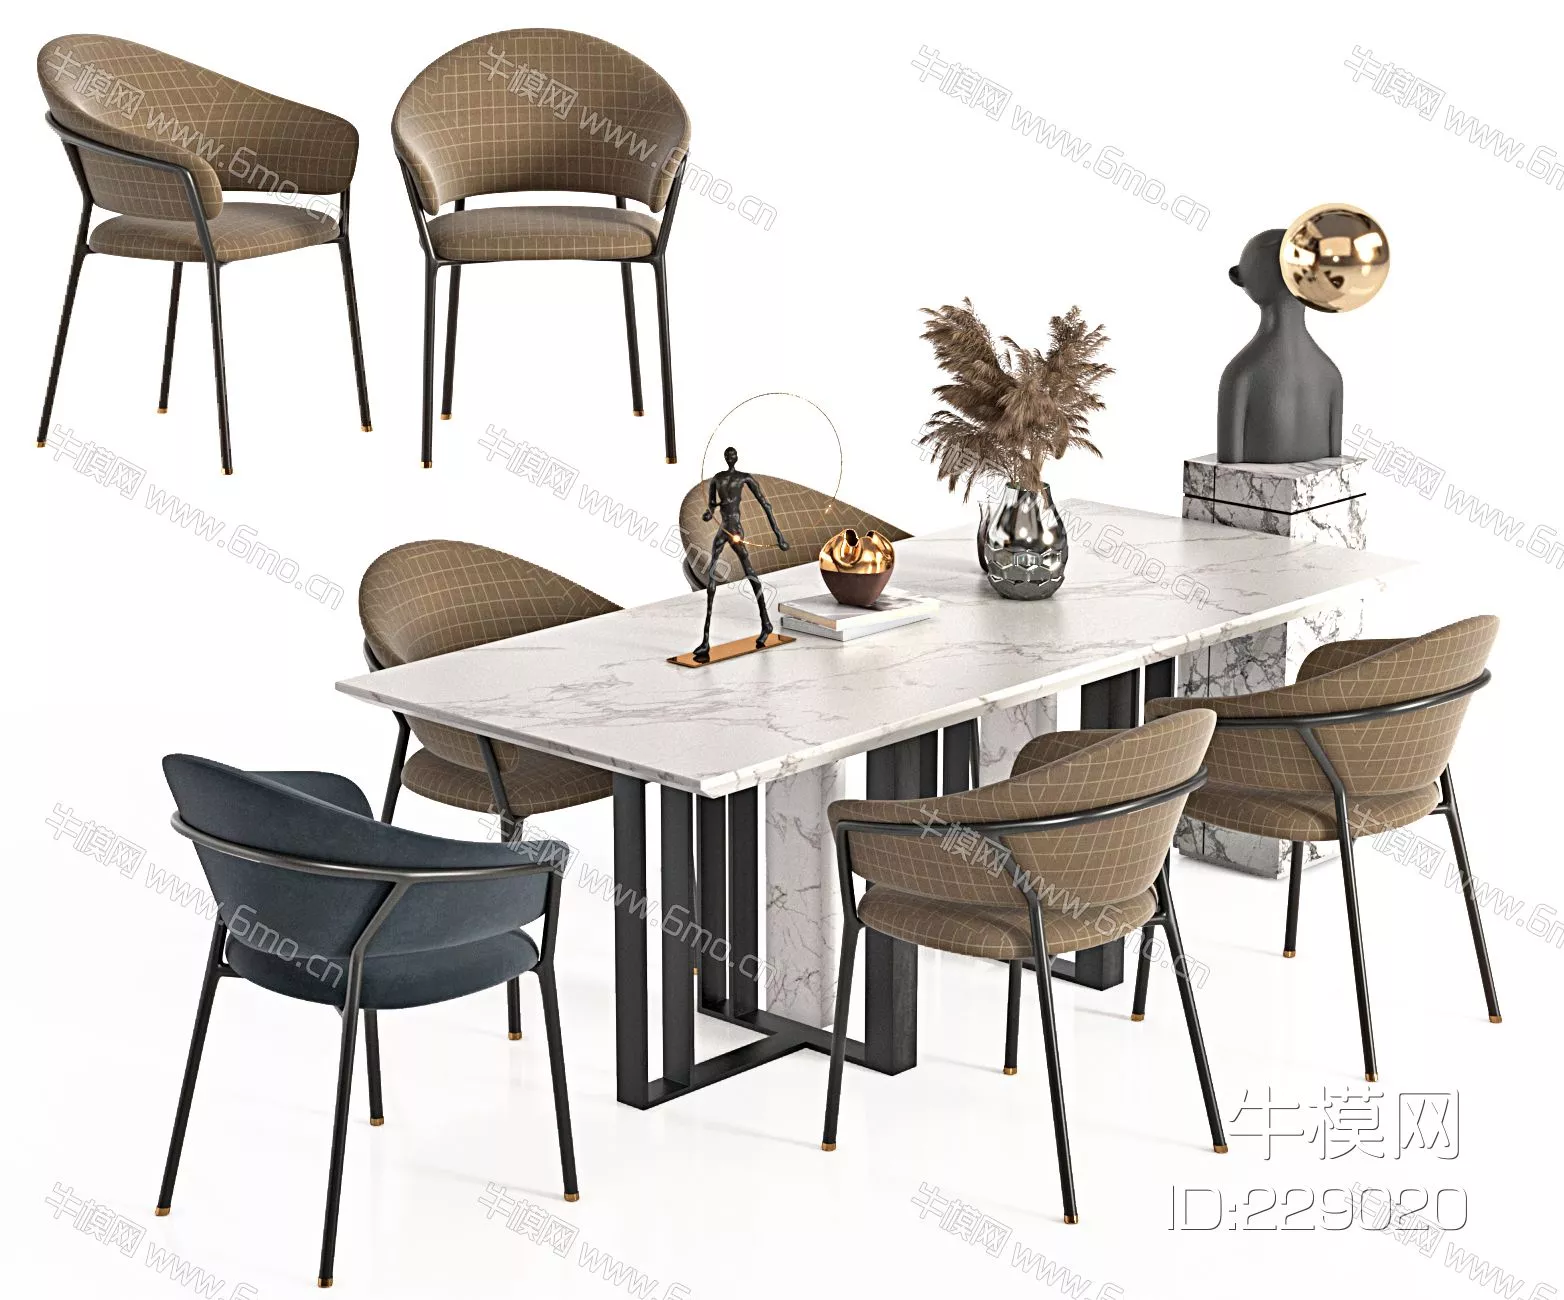 MODERN DINING TABLE SET - SKETCHUP 3D MODEL - VRAY - 229020